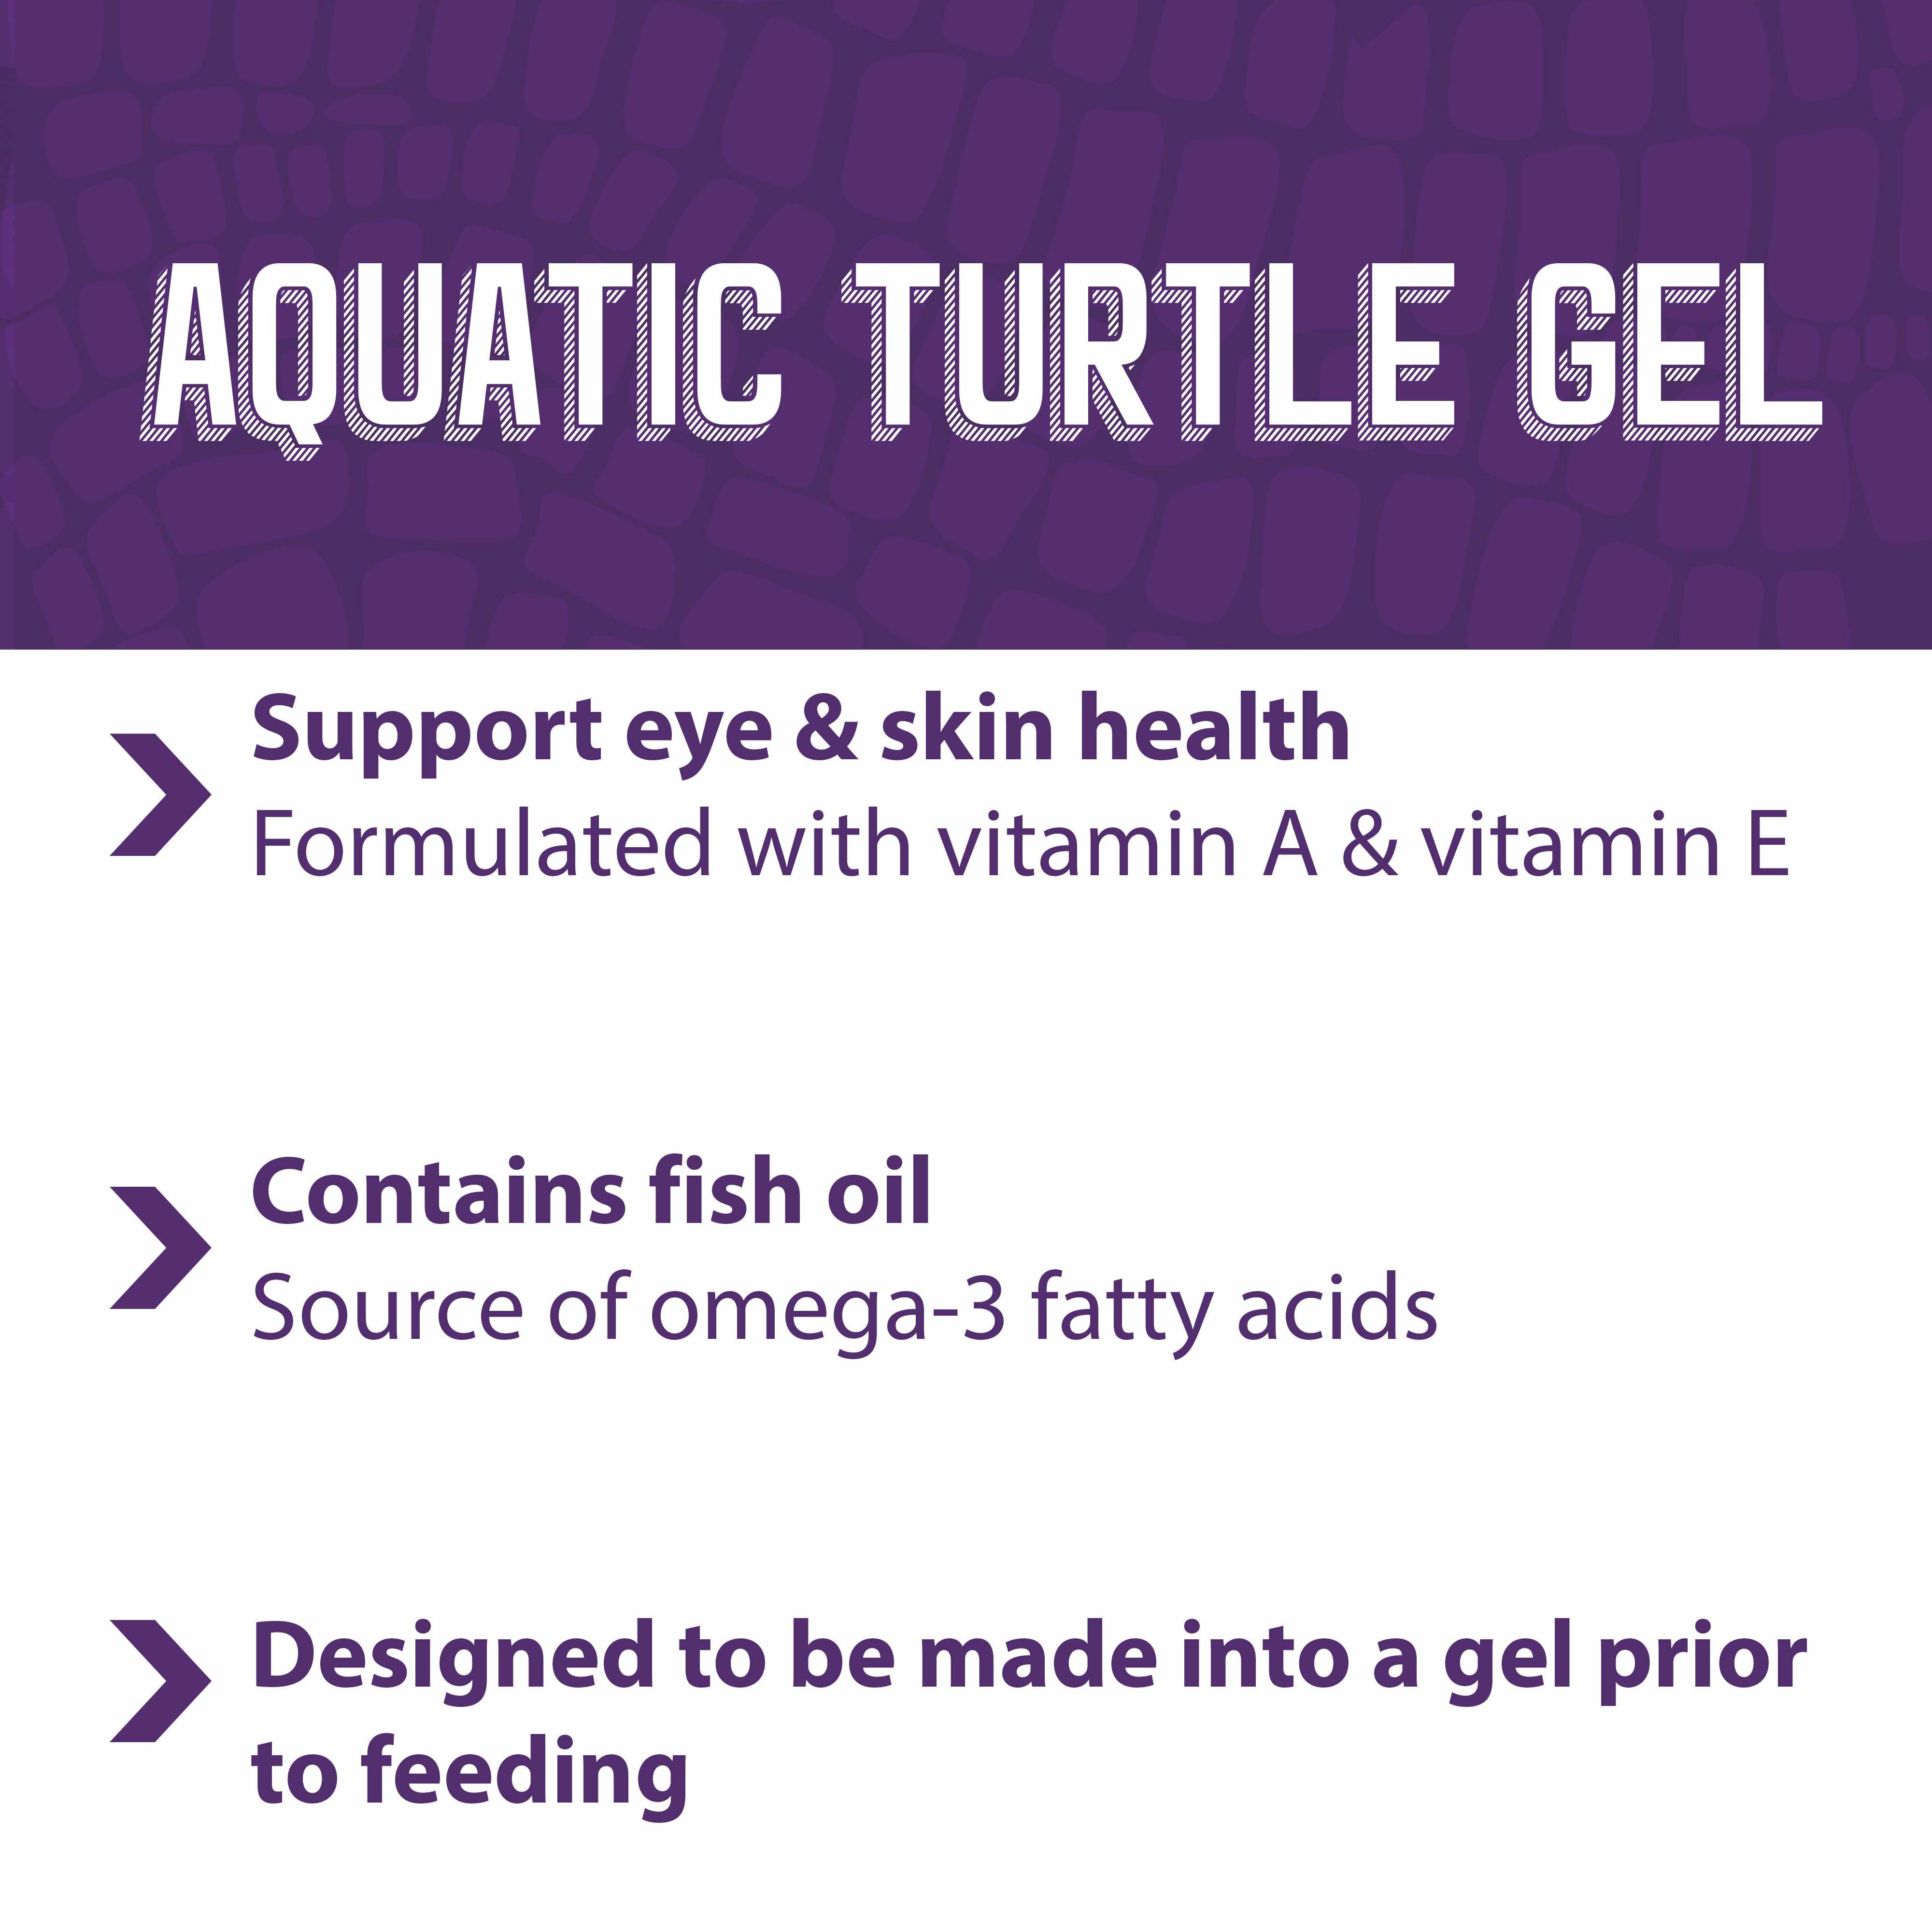 Aquatic Turtle Gel supports skin & eye health